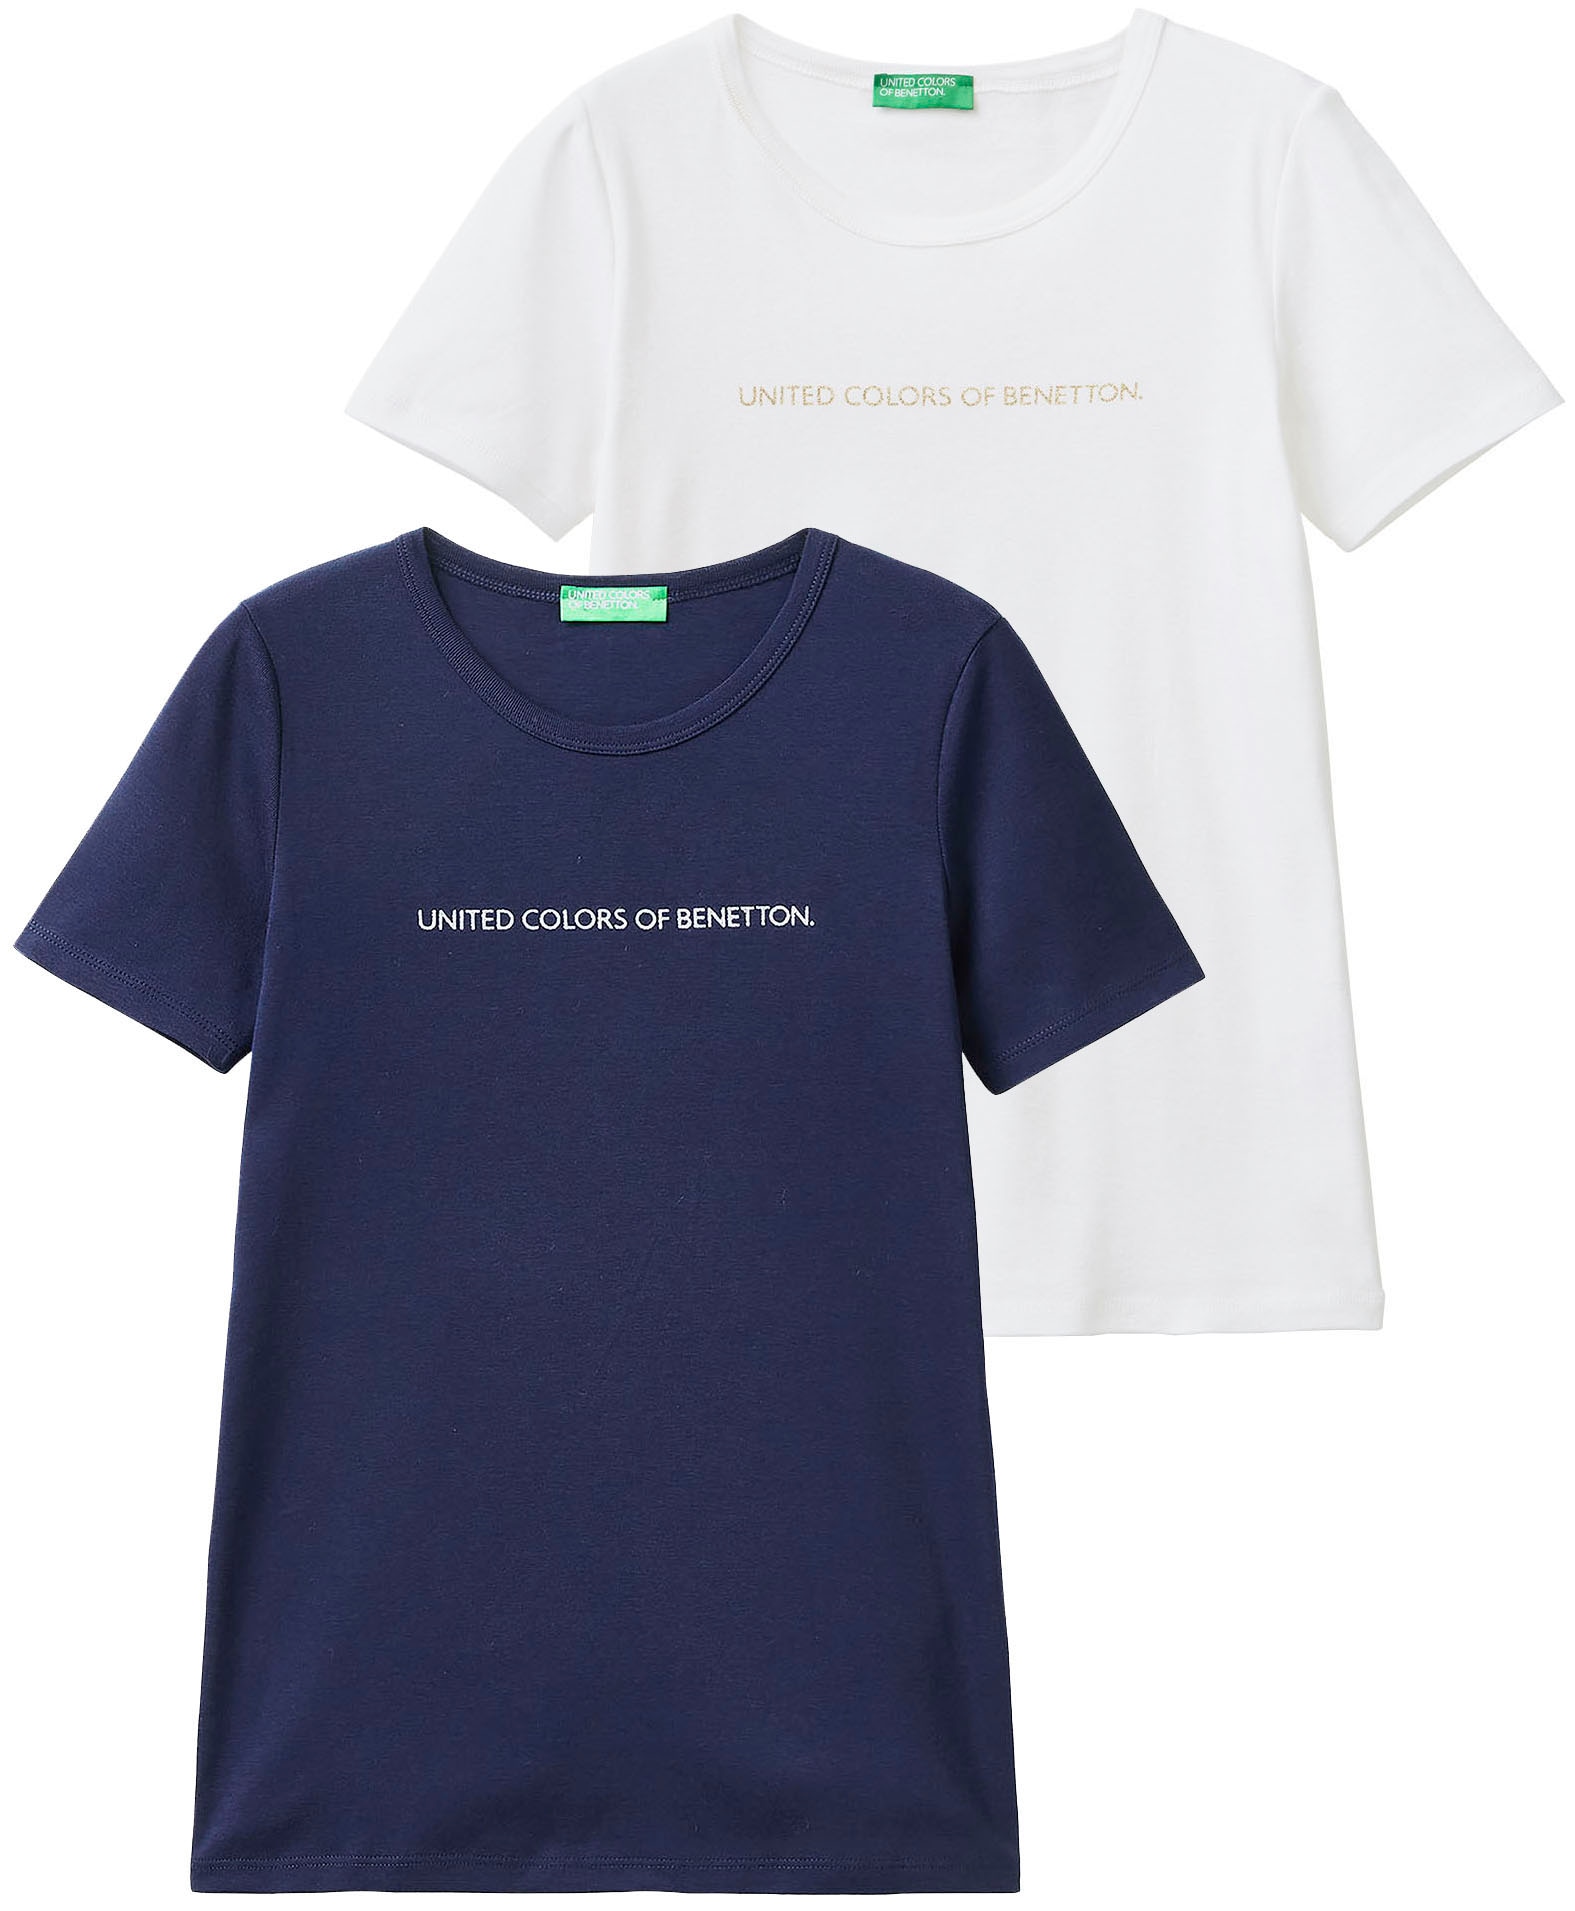 United Colors of Benetton T-Shirt, unsere Bestseller im Doppelpack